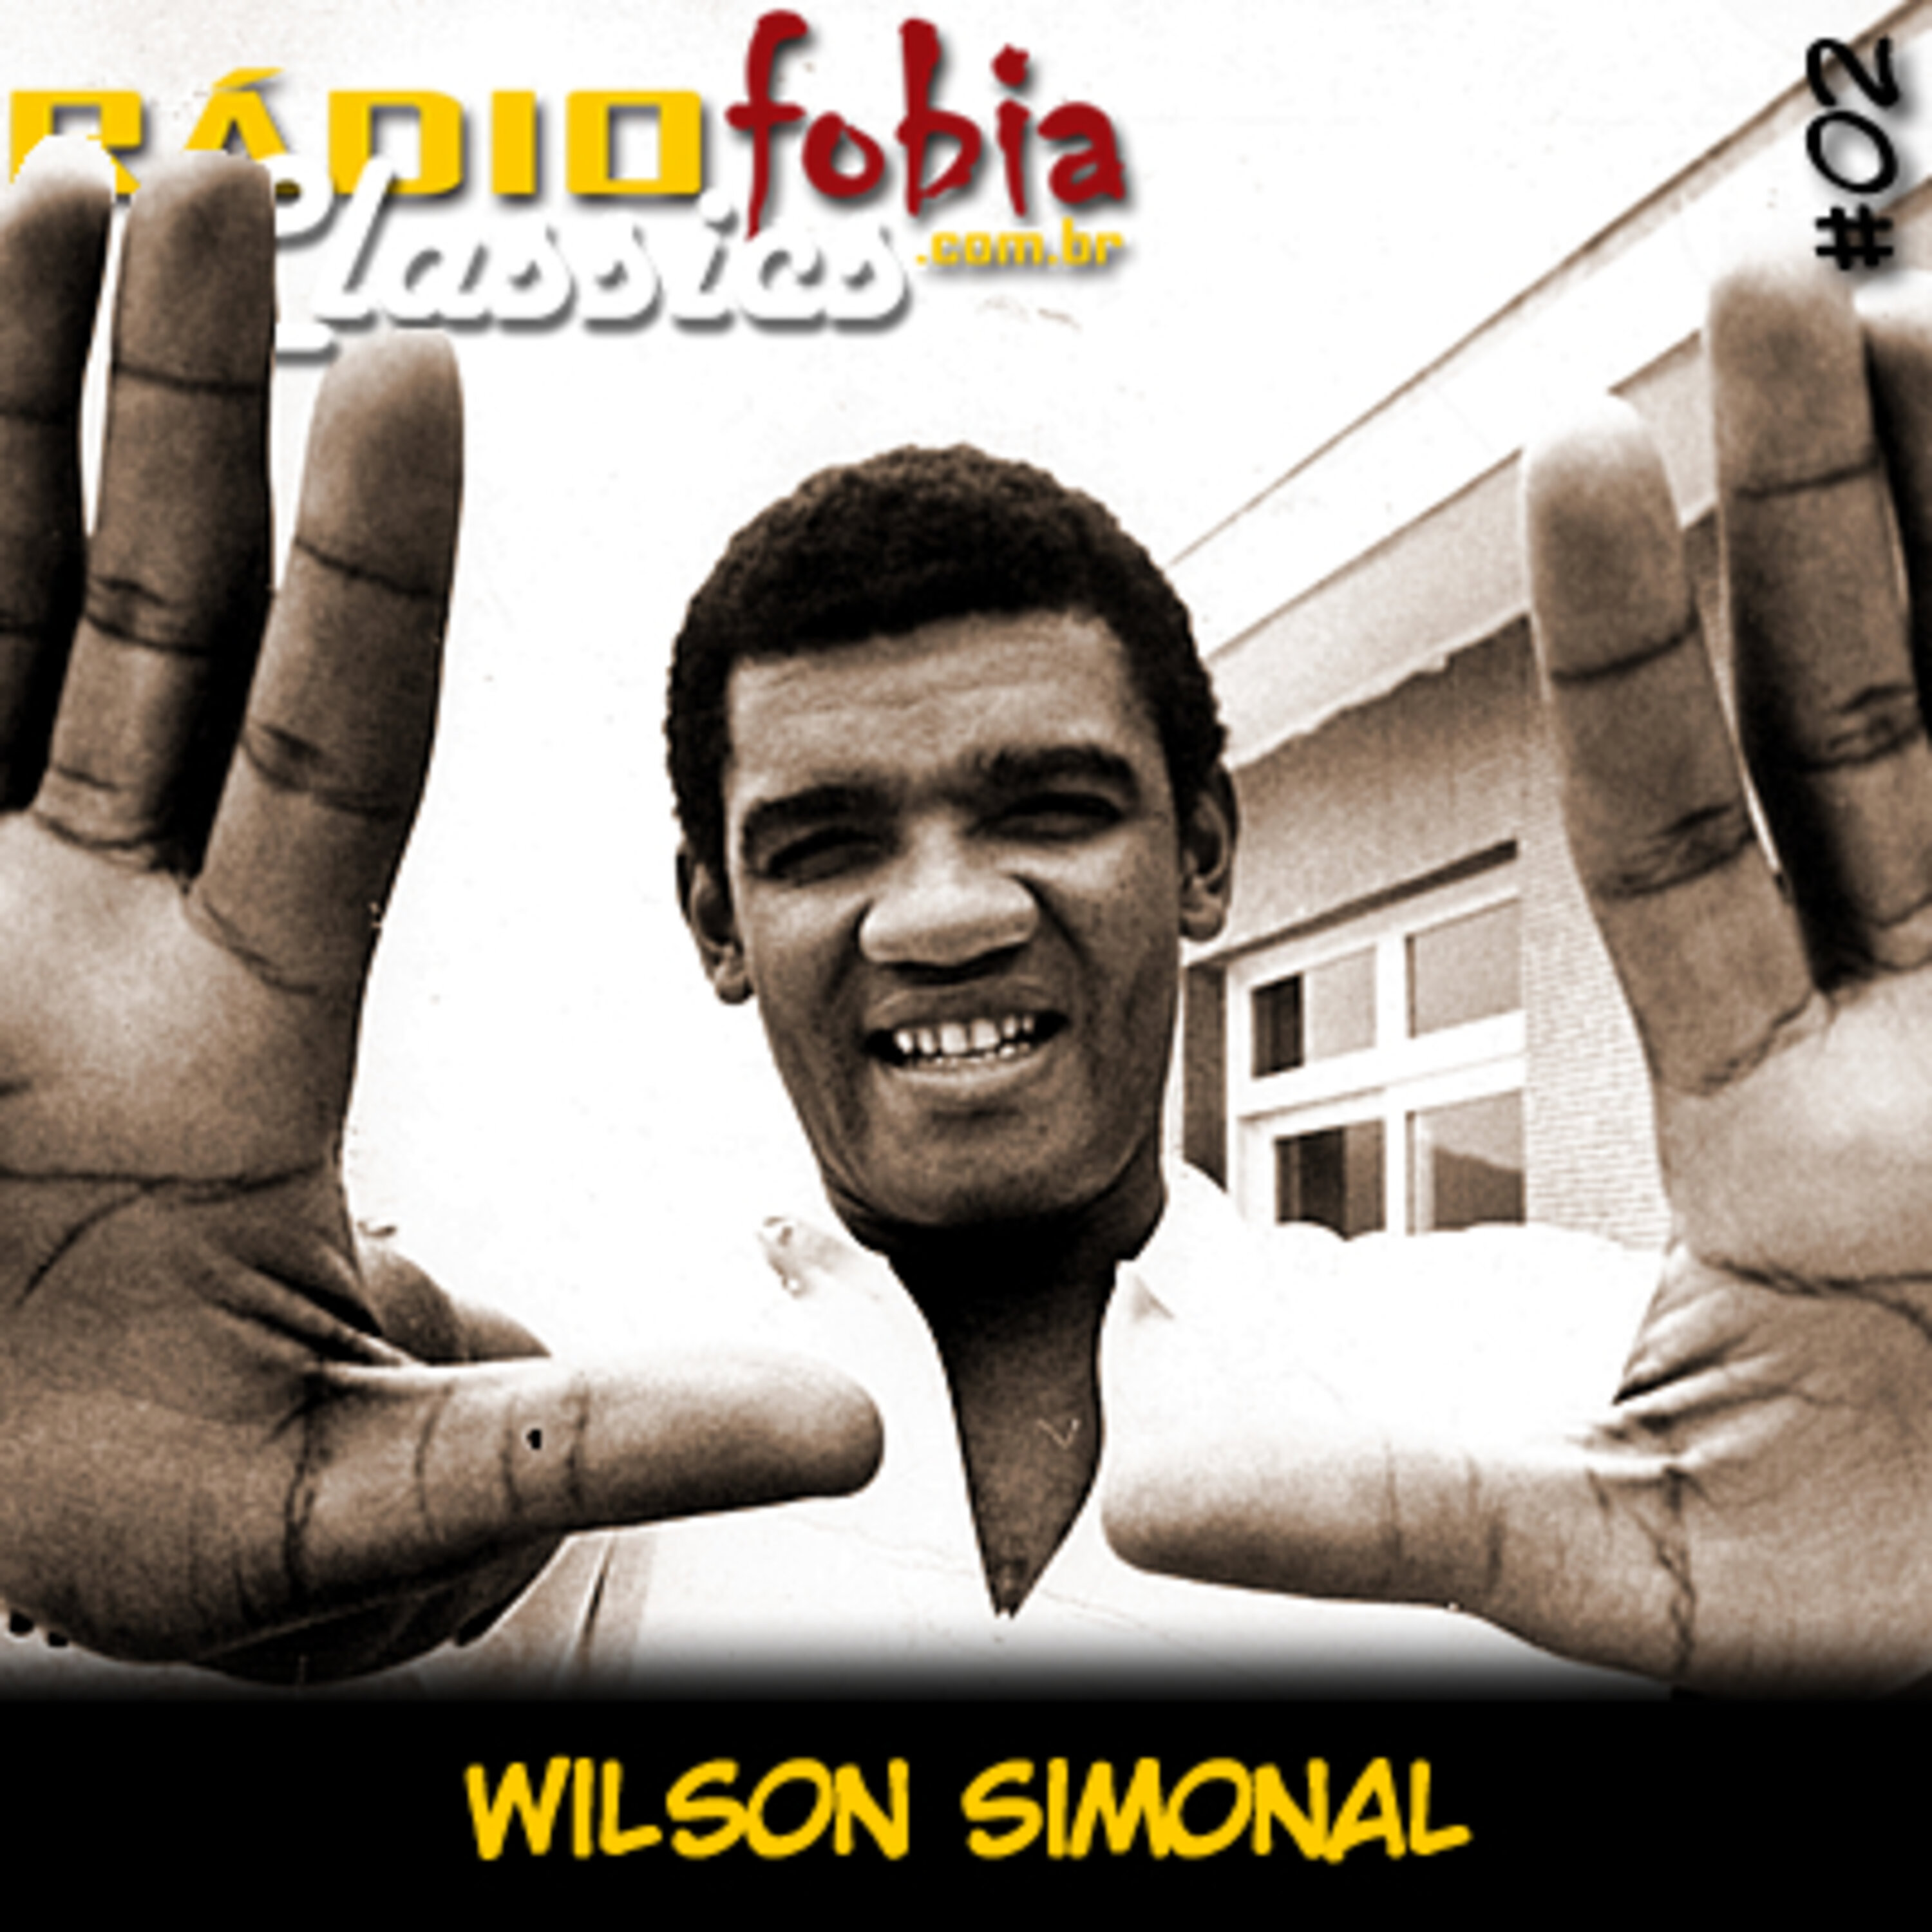 RÁDIOFOBIA Classics #02 – Wilson Simonal